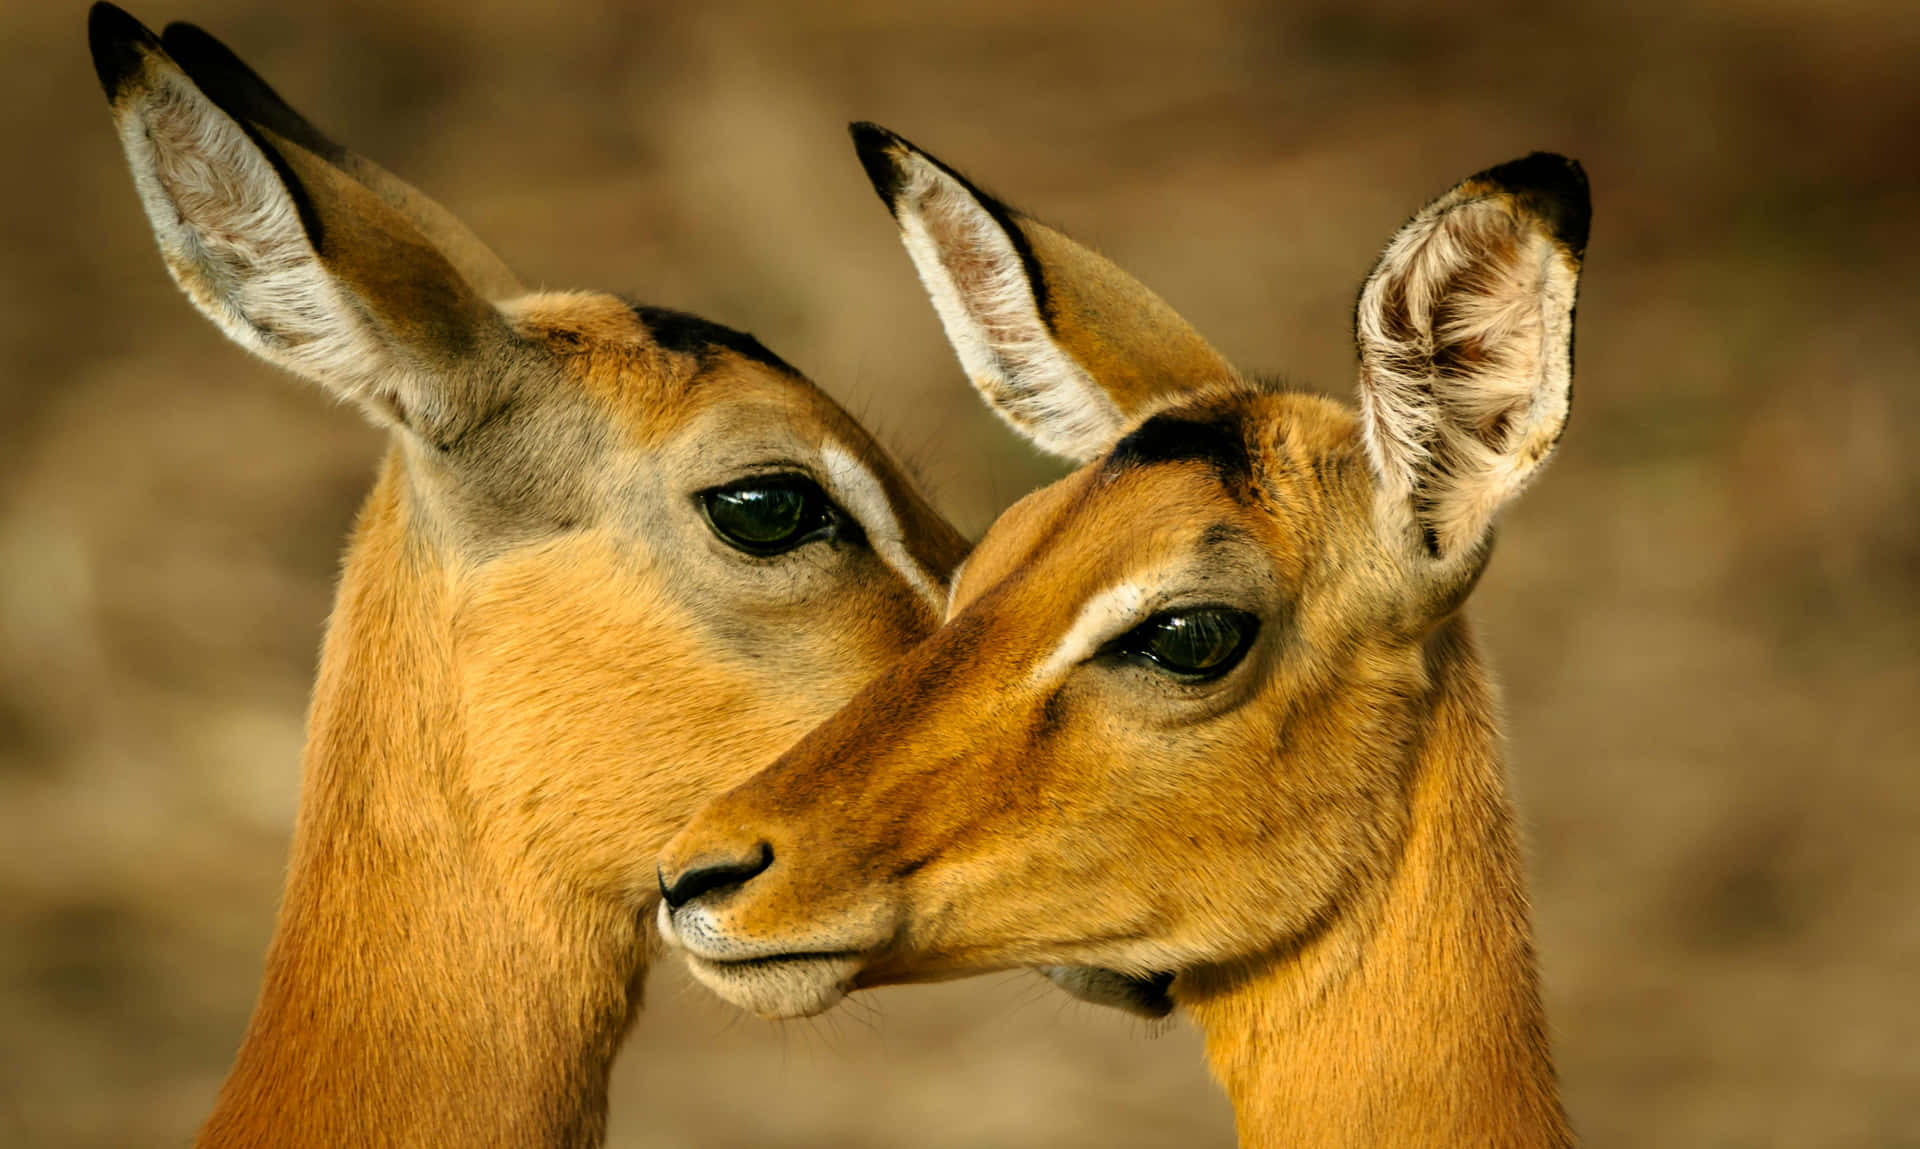 Affectionate Antelopes Closeup Wallpaper